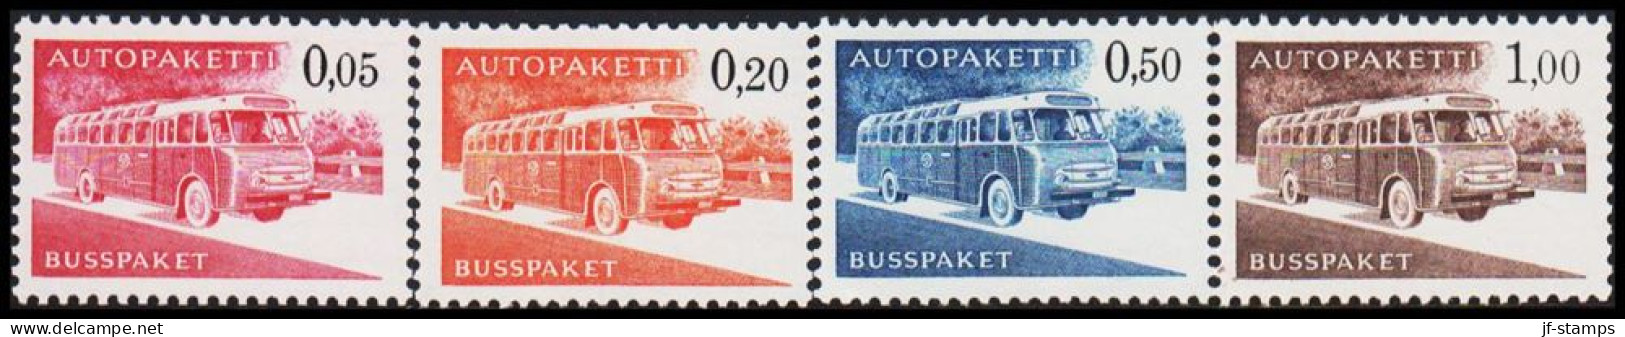 1963-1980. FINLAND. Mail Bus. Complete Set AUTOPAKETTI - BUSSPAKET Never Hinged. Normal... (Michel AP 10-13x) - JF535608 - Postbuspakete